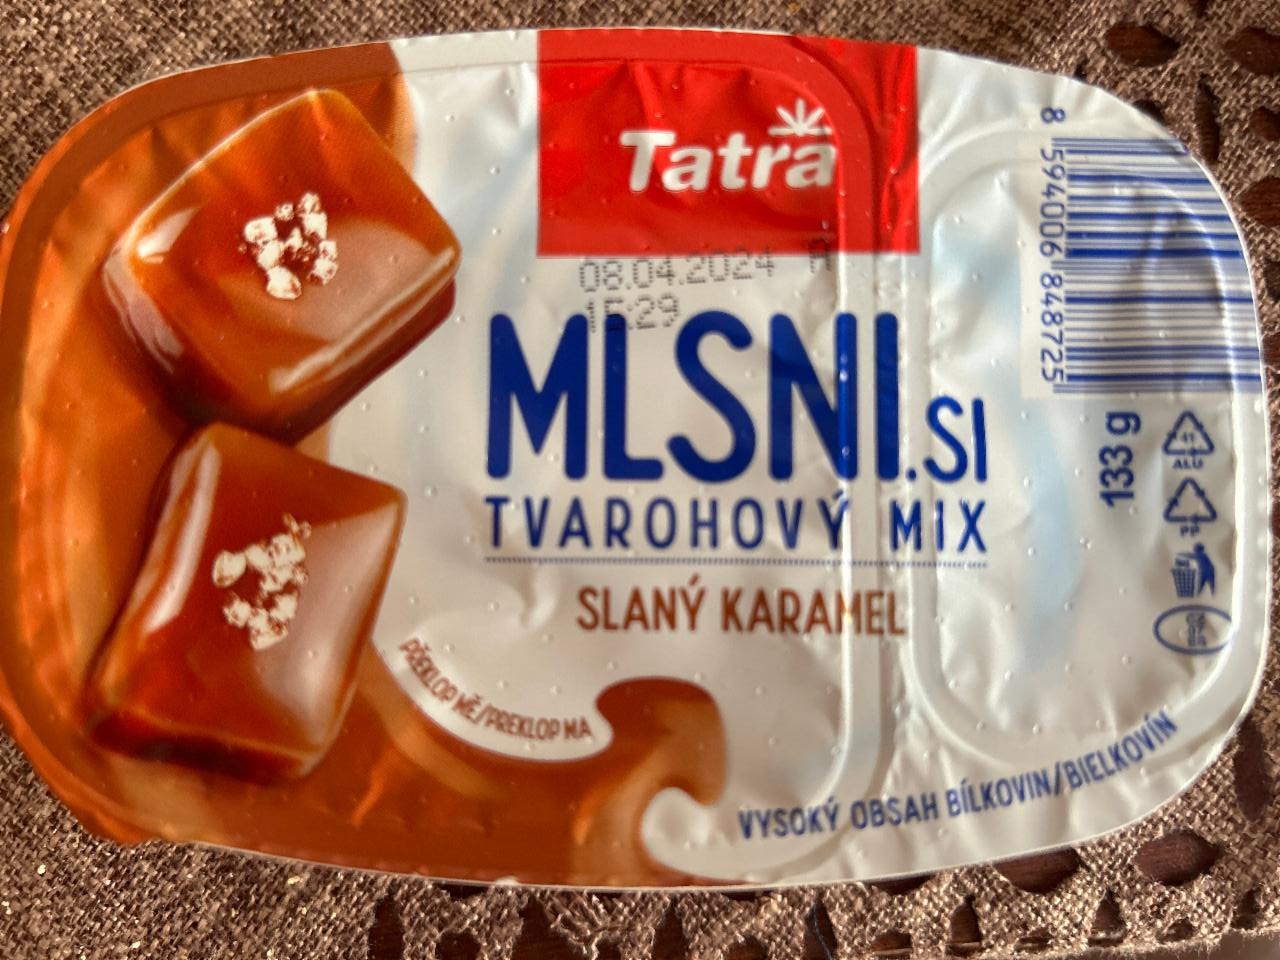 Fotografie - Mlsni.si tvarohový mix Slaný karamel Tatra